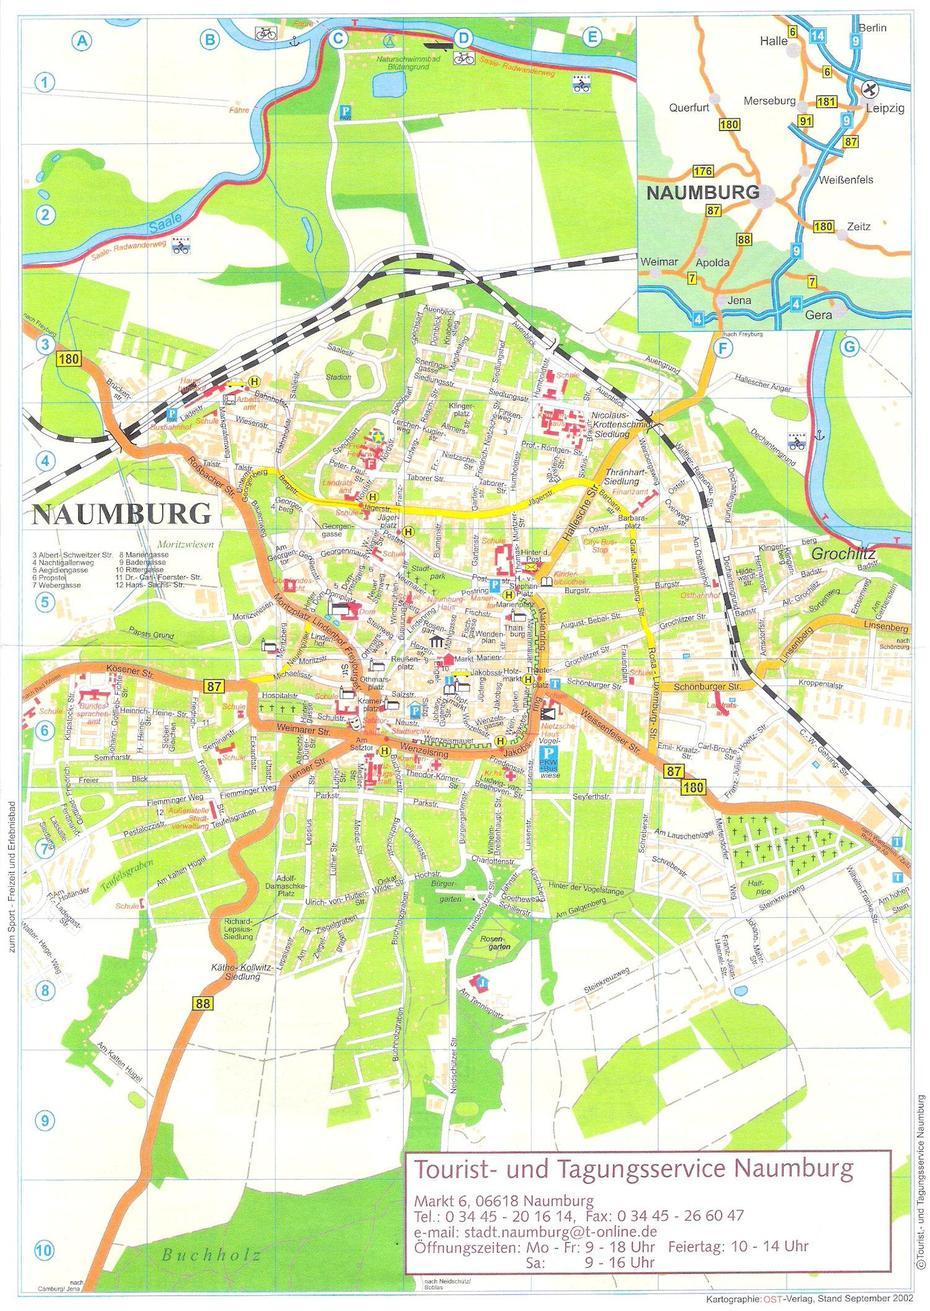 Guide To Bach Tour: Naumburg – Maps, Naumburg, Germany, Naumburg Cathedral, Eisleben Germany